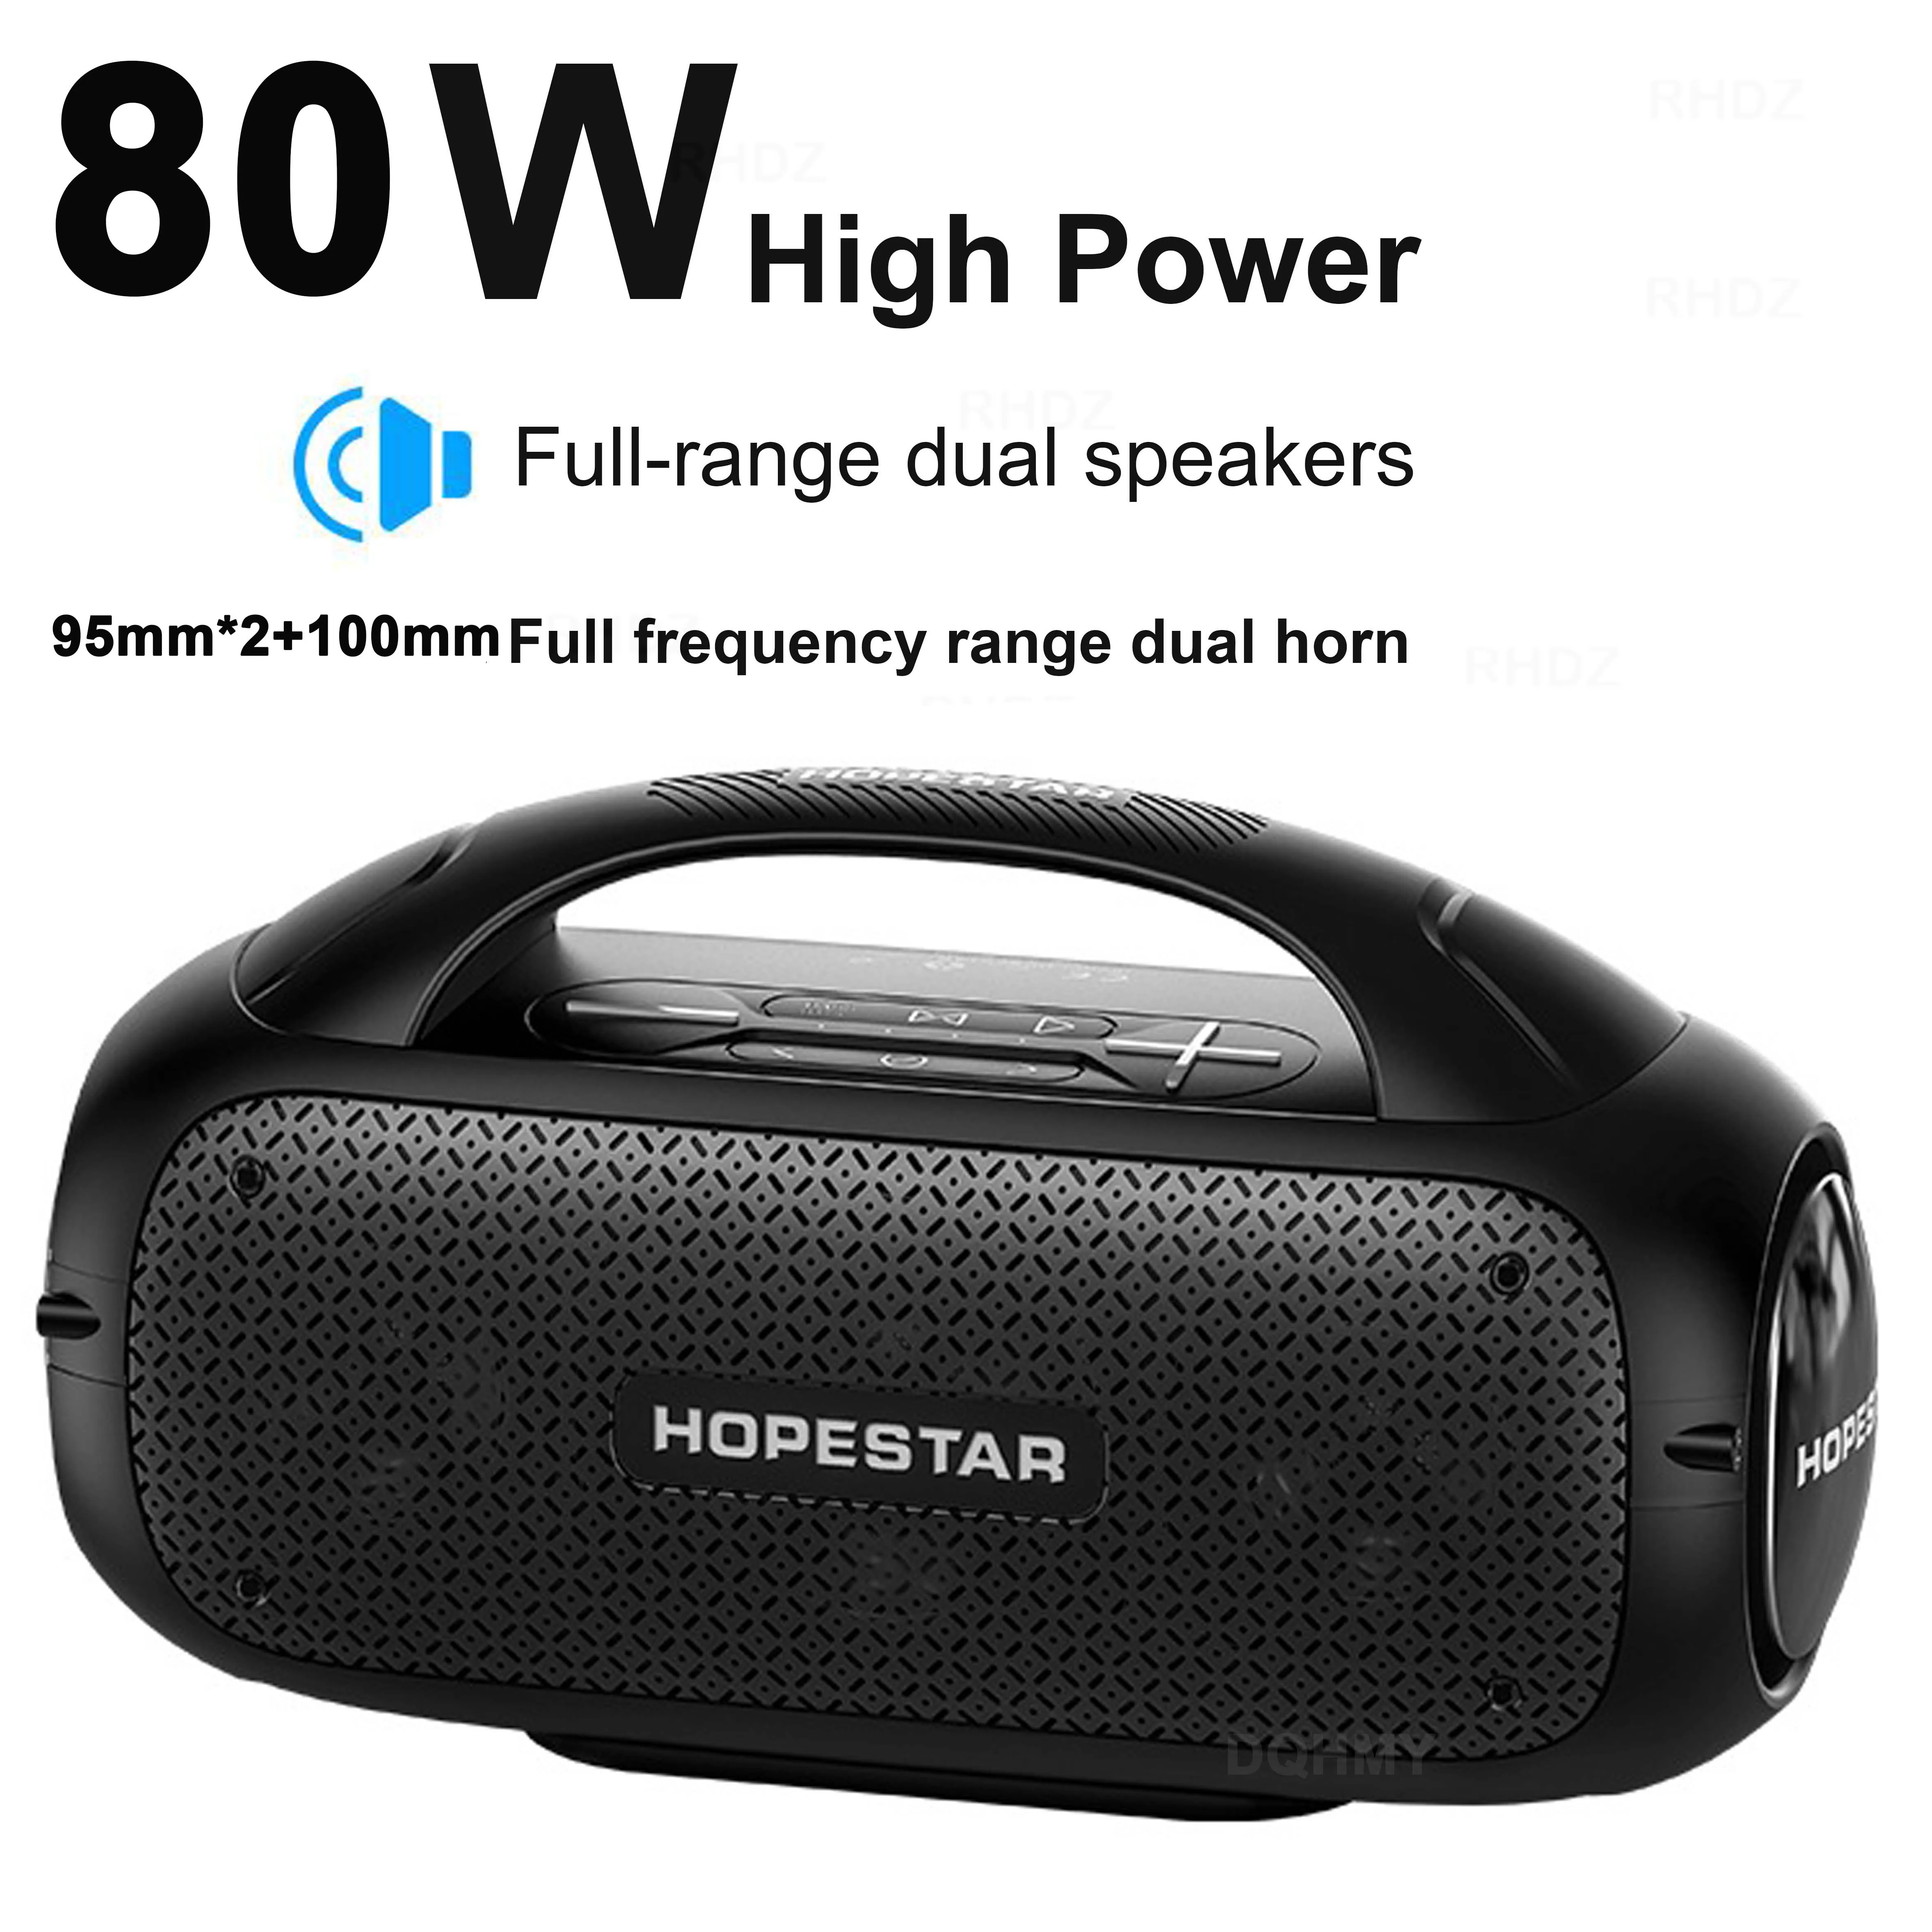 

HOPESTAR A50 80W High Power Large Wireless Bluetooth Speakers Portable Subwoofer Super Bass Boom Box Microphone Karaoke Machine